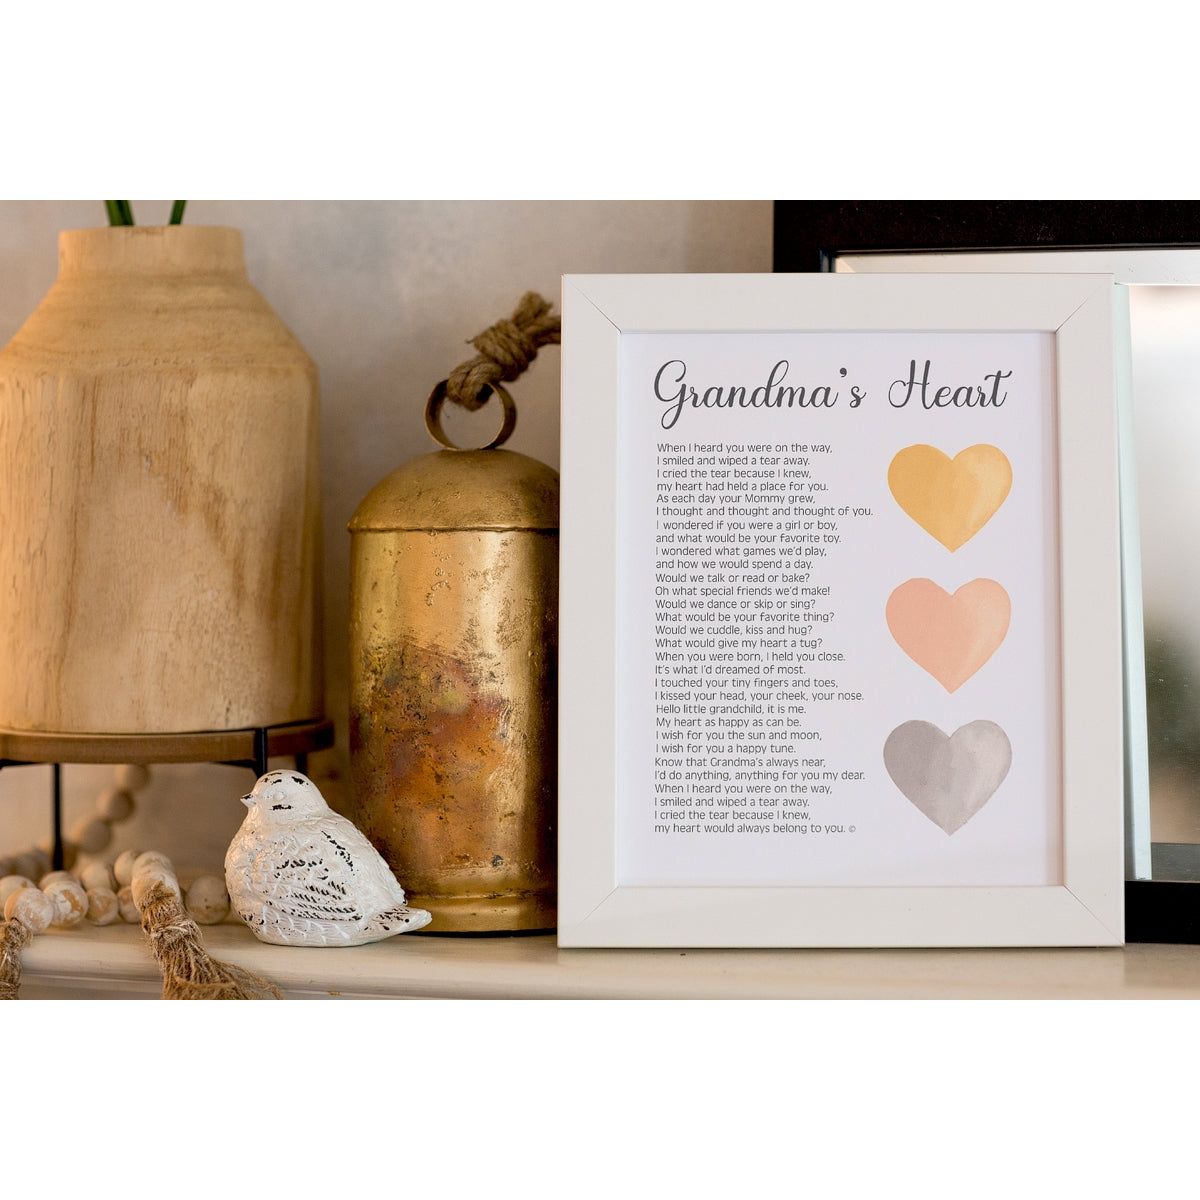 8x10 white frame with "Grandma's Heart" poem with boho artwork.